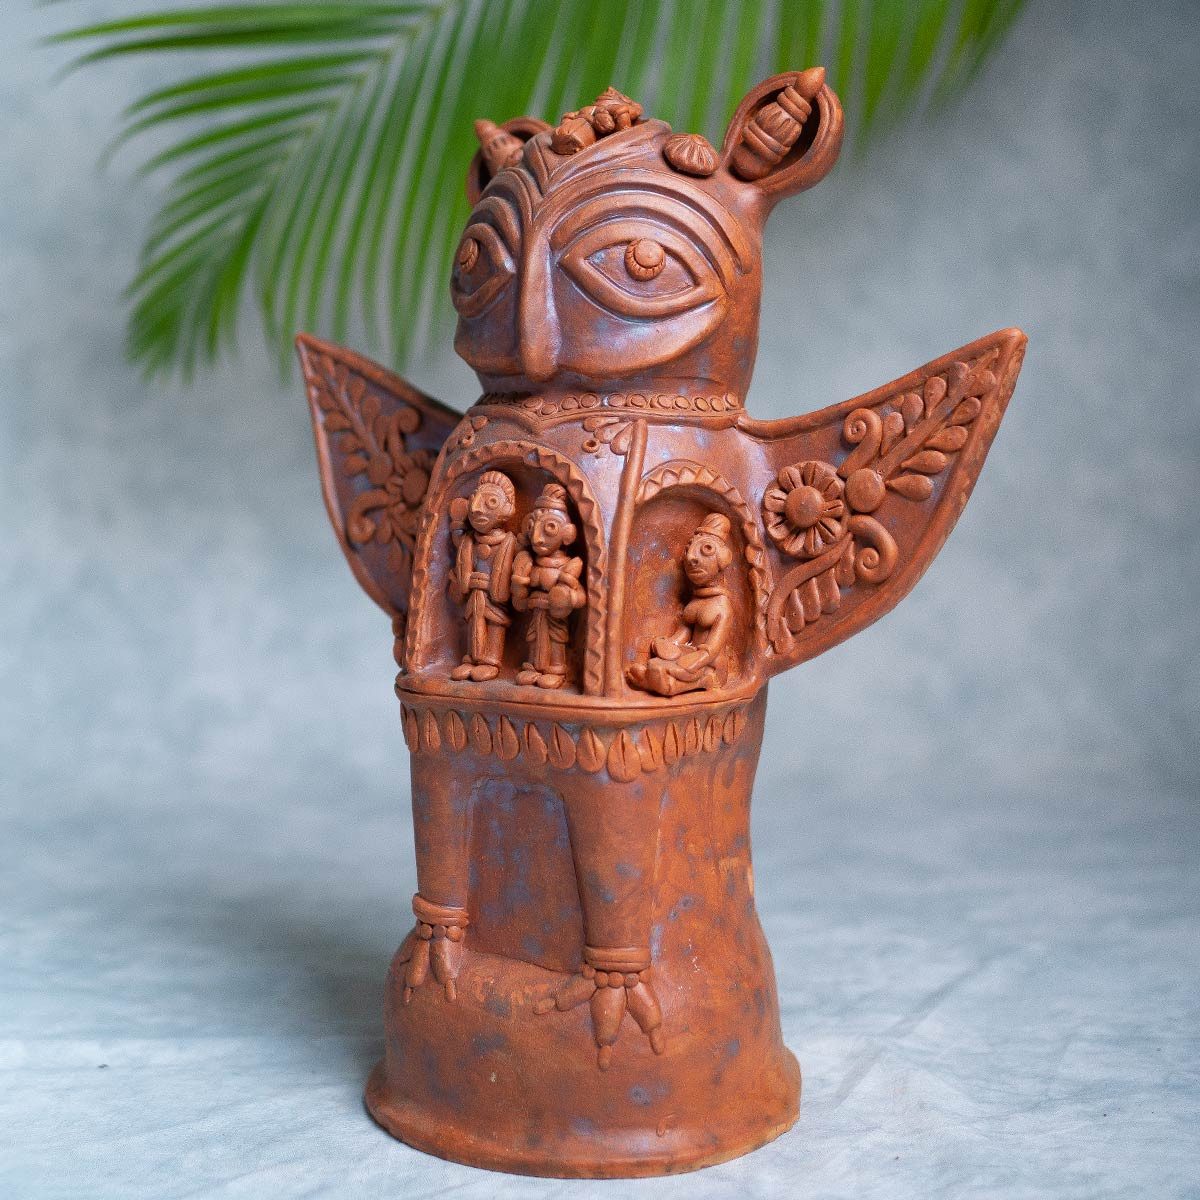 Terracotta Handcrafted Owl (Pecha)